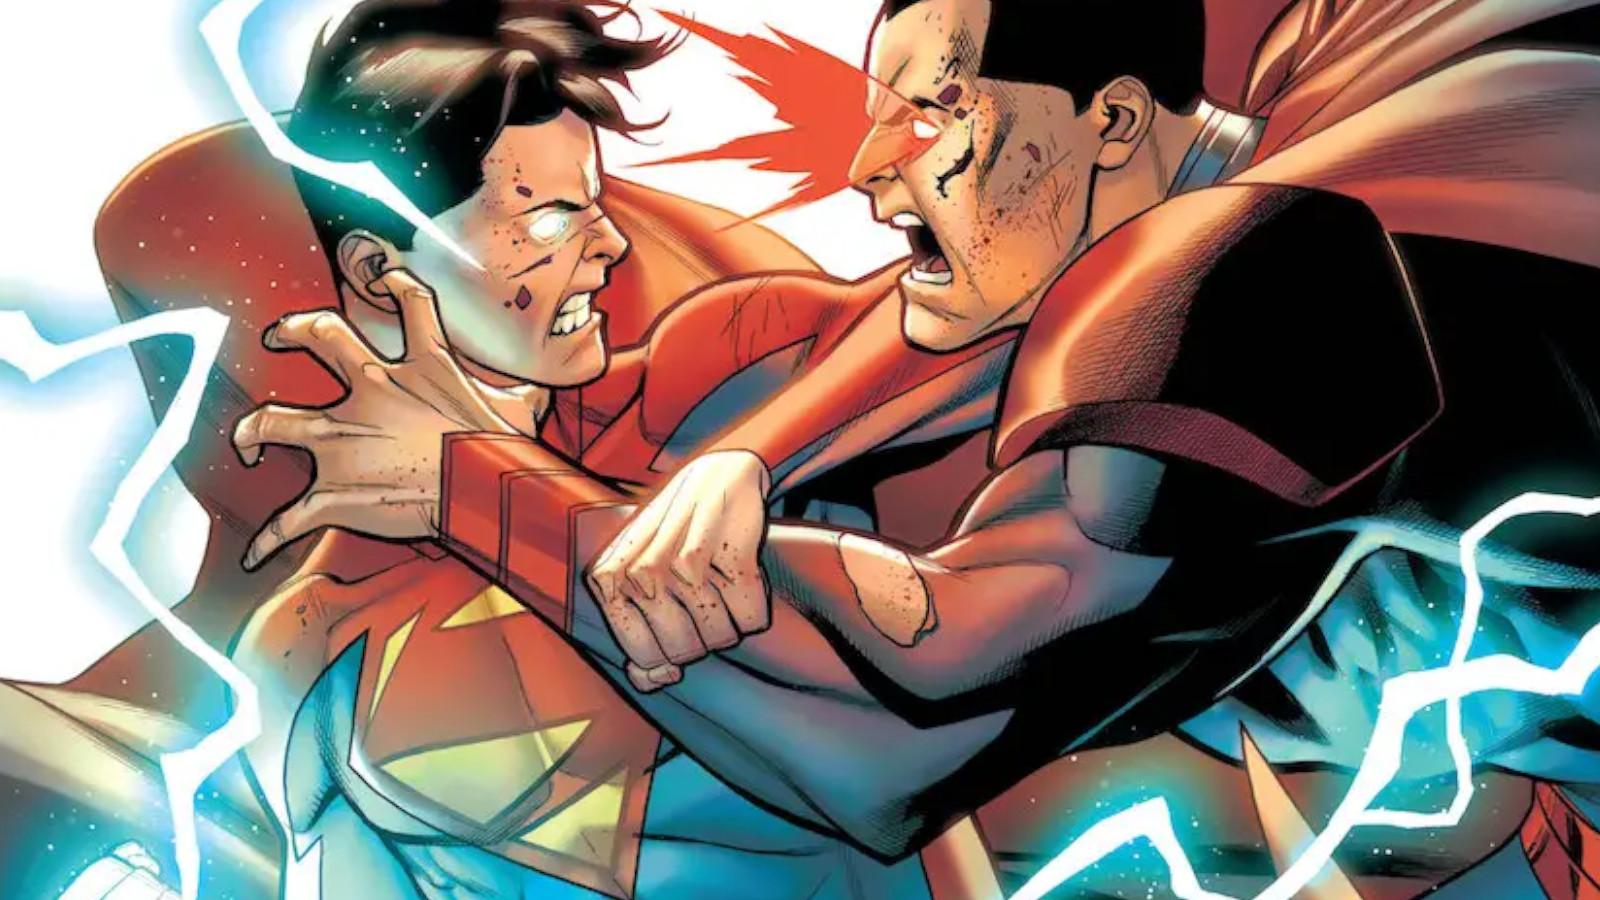 Cover art to Adventures of Superman: Jon Kent #6.